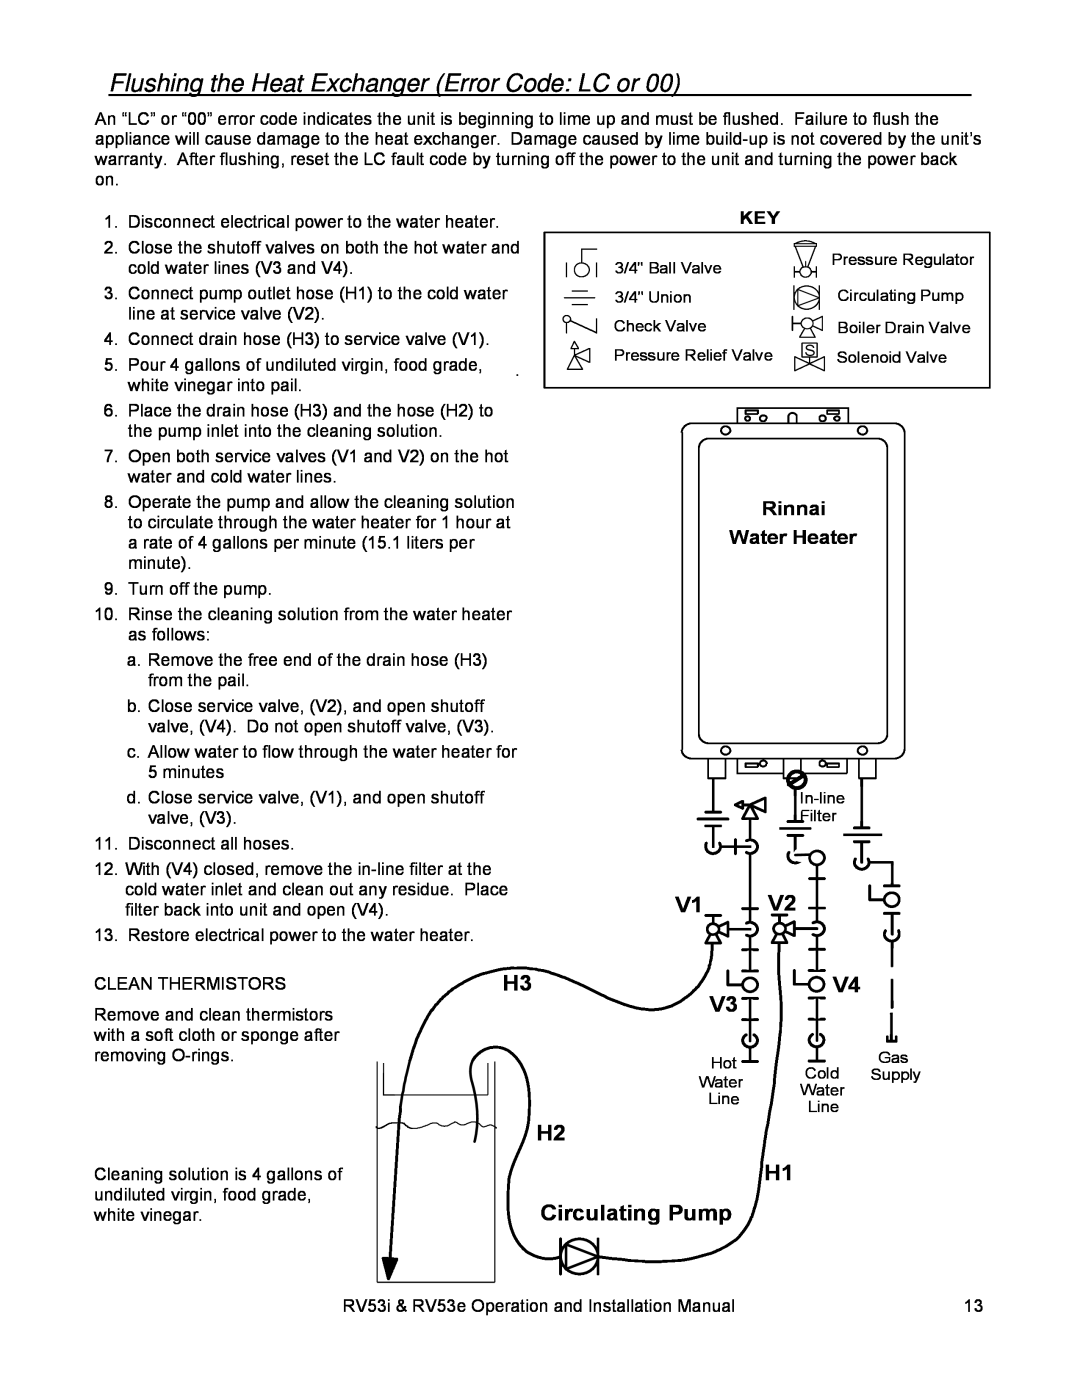 Rinnai RV53I, RV53E Flushing the Heat Exchanger Error Code LC or, H2 H1 Circulating Pump, Rinnai Water Heater 